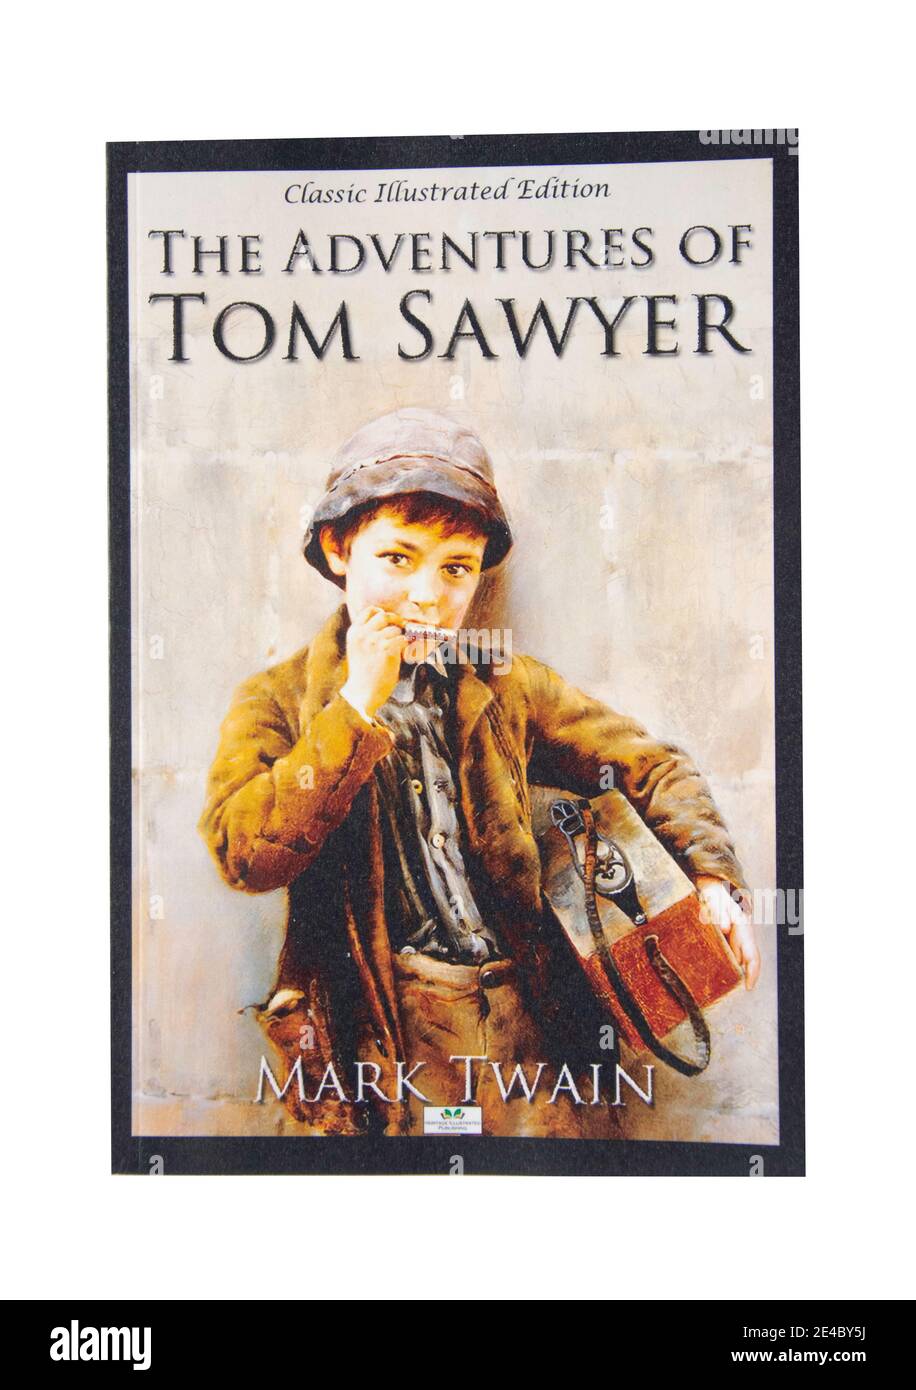 The Adventures of Tom Sawyer libro de Mark Twain, Gran Londres, Inglaterra, Reino Unido Foto de stock